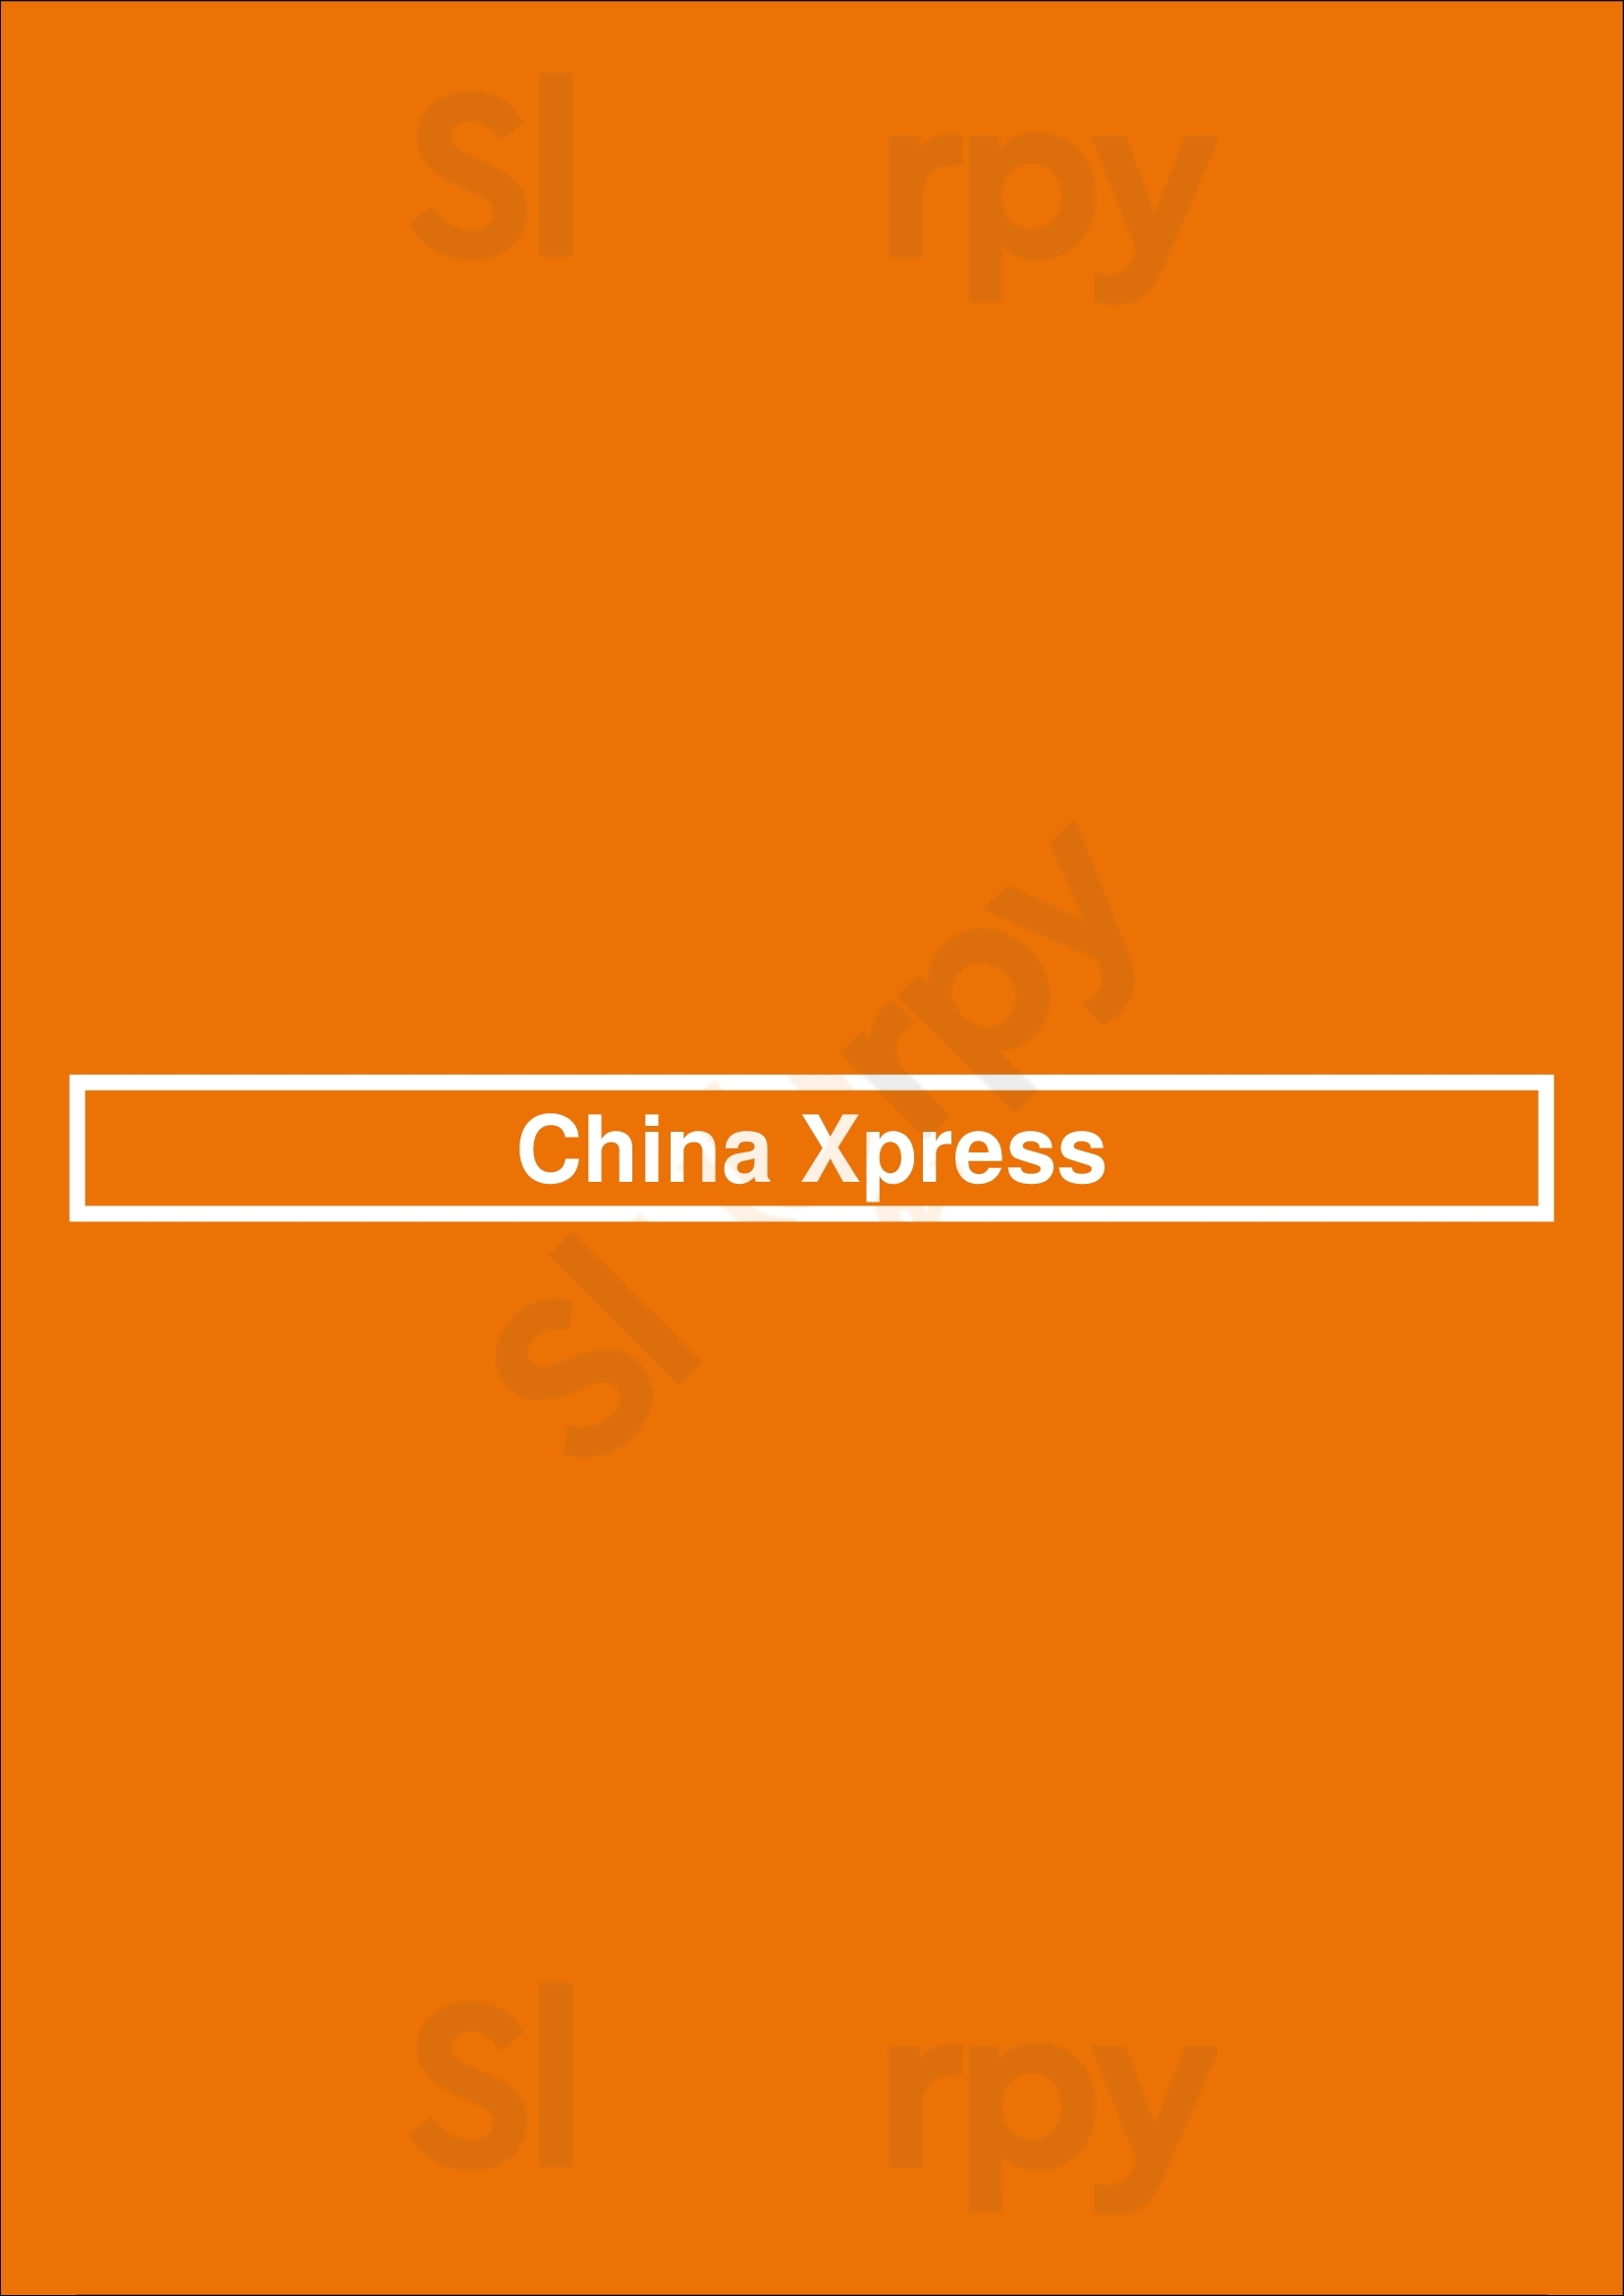 China Xpress Tiverton Menu - 1